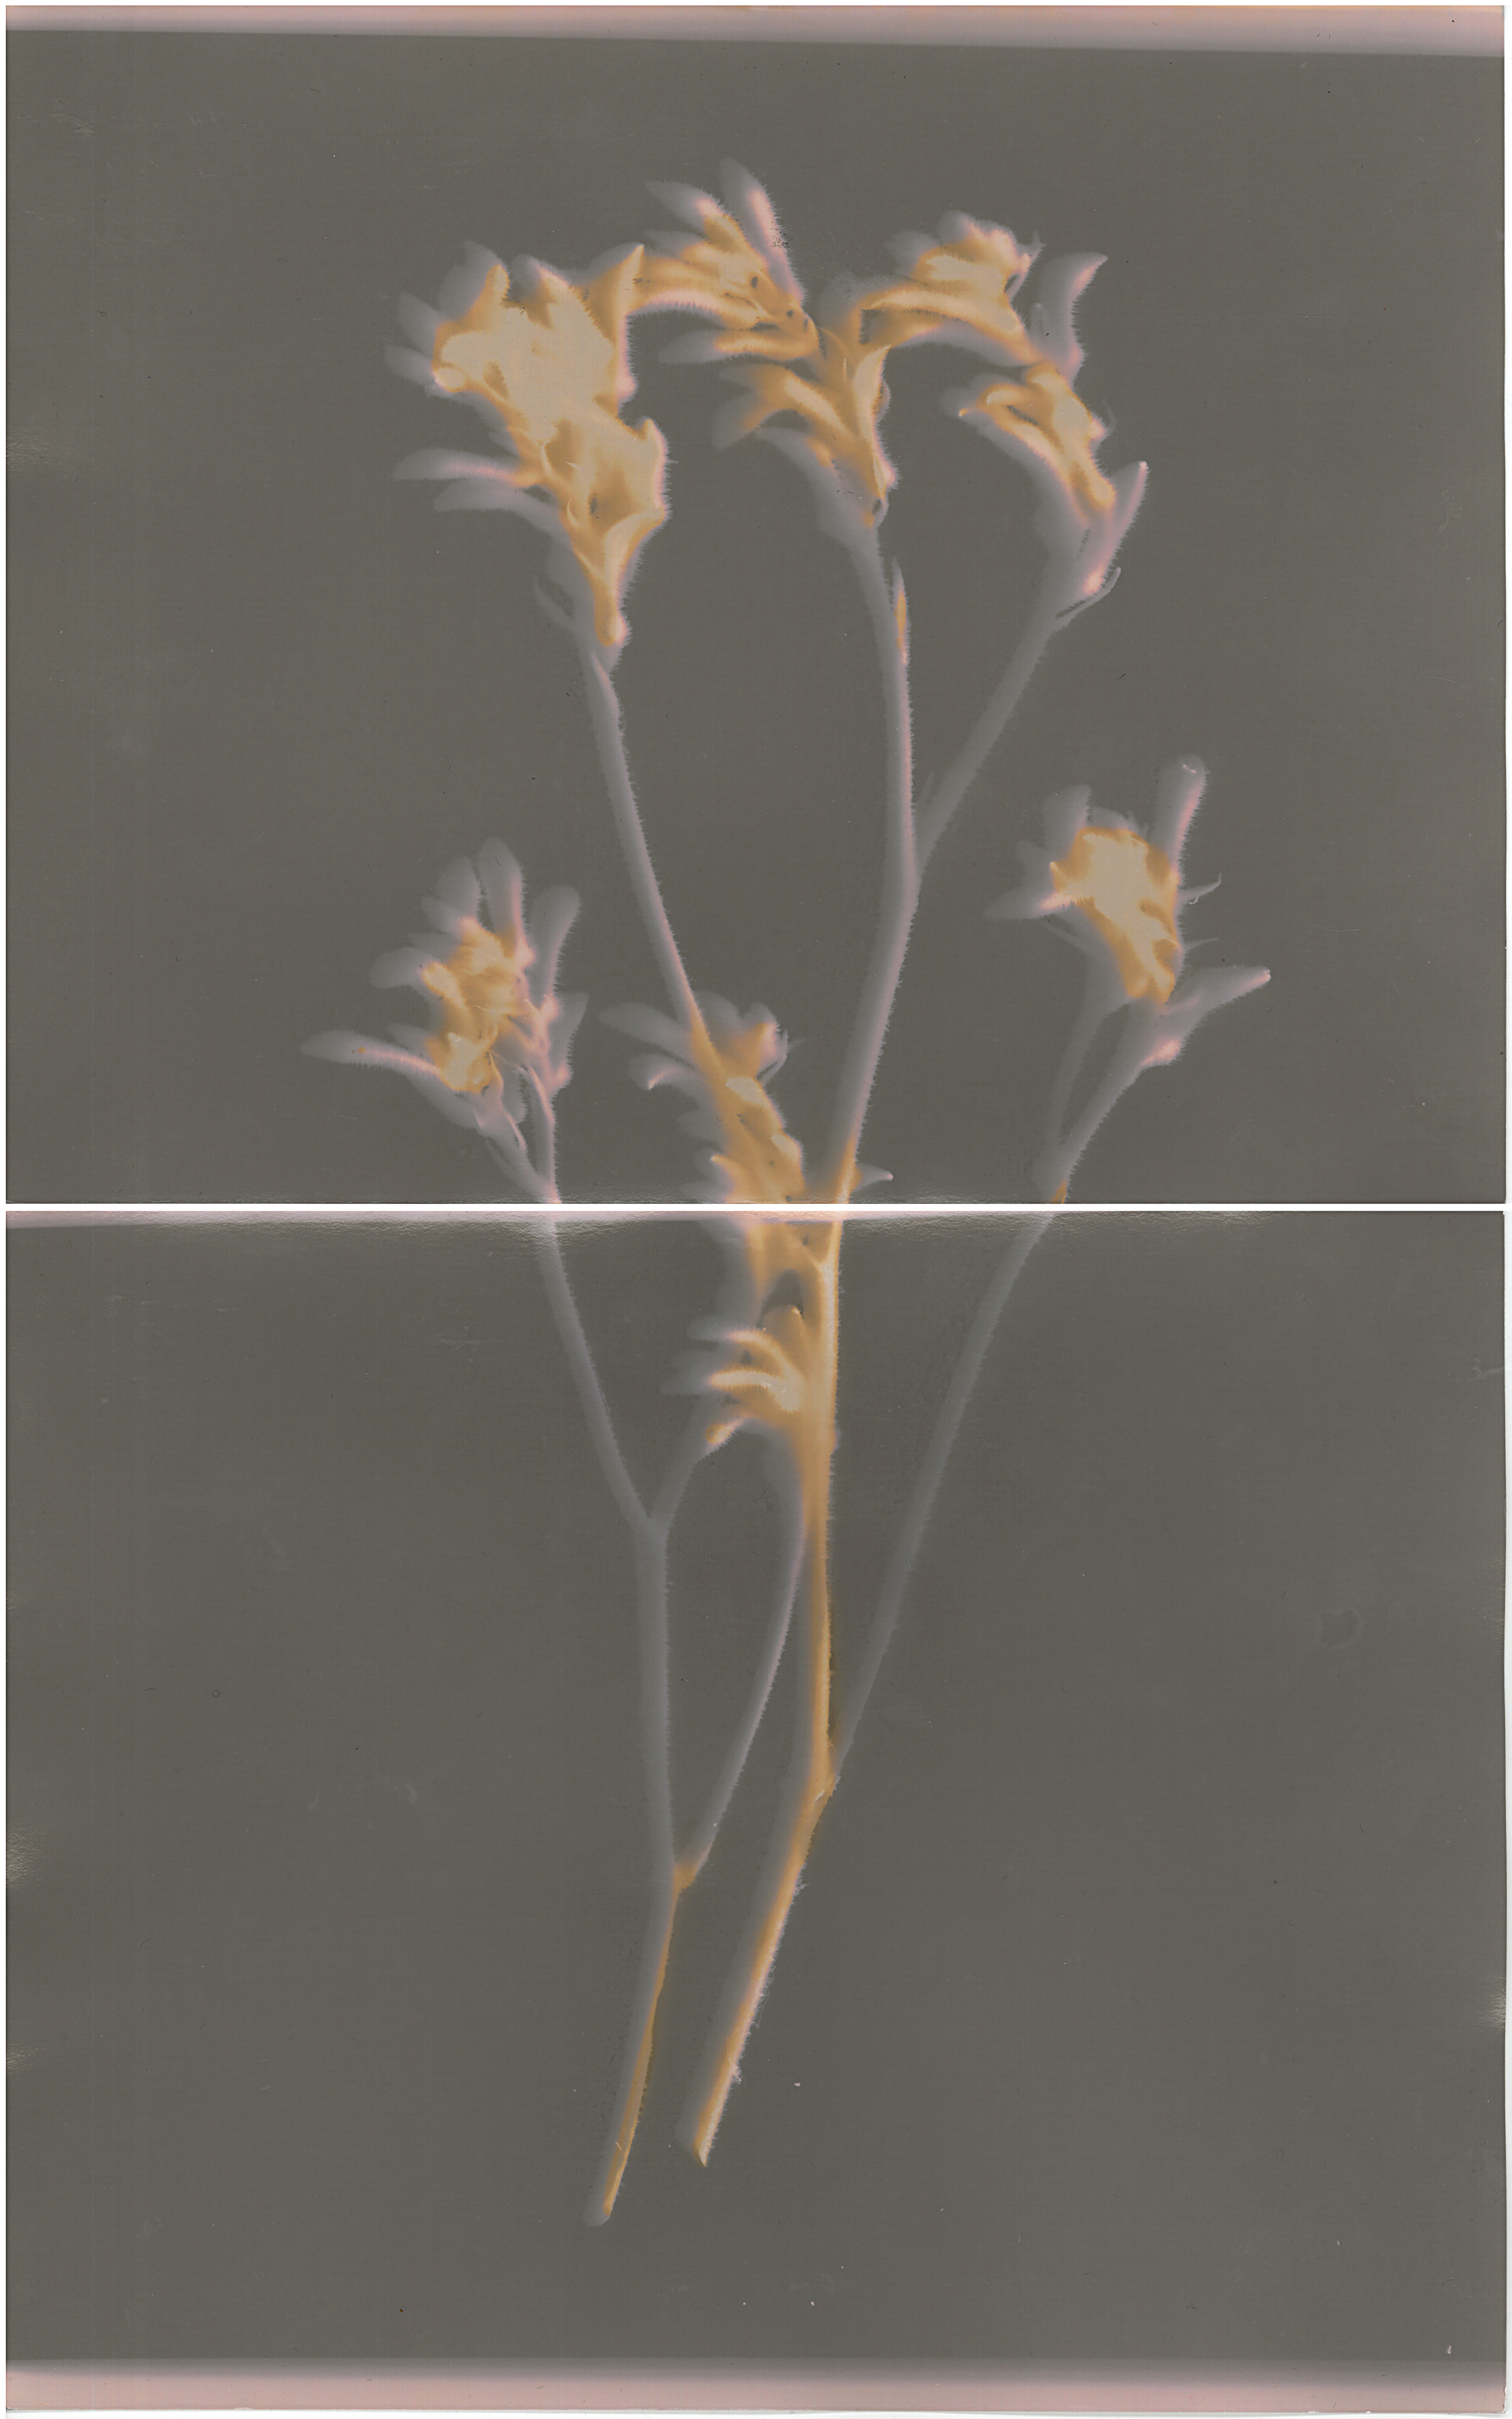  Stephanie Richter  Untitled (backyard lumen experiment 3 - Kangaroo Paw)&nbsp; &nbsp;2017 gelatin silver print 20.3 x 25.4 cm 